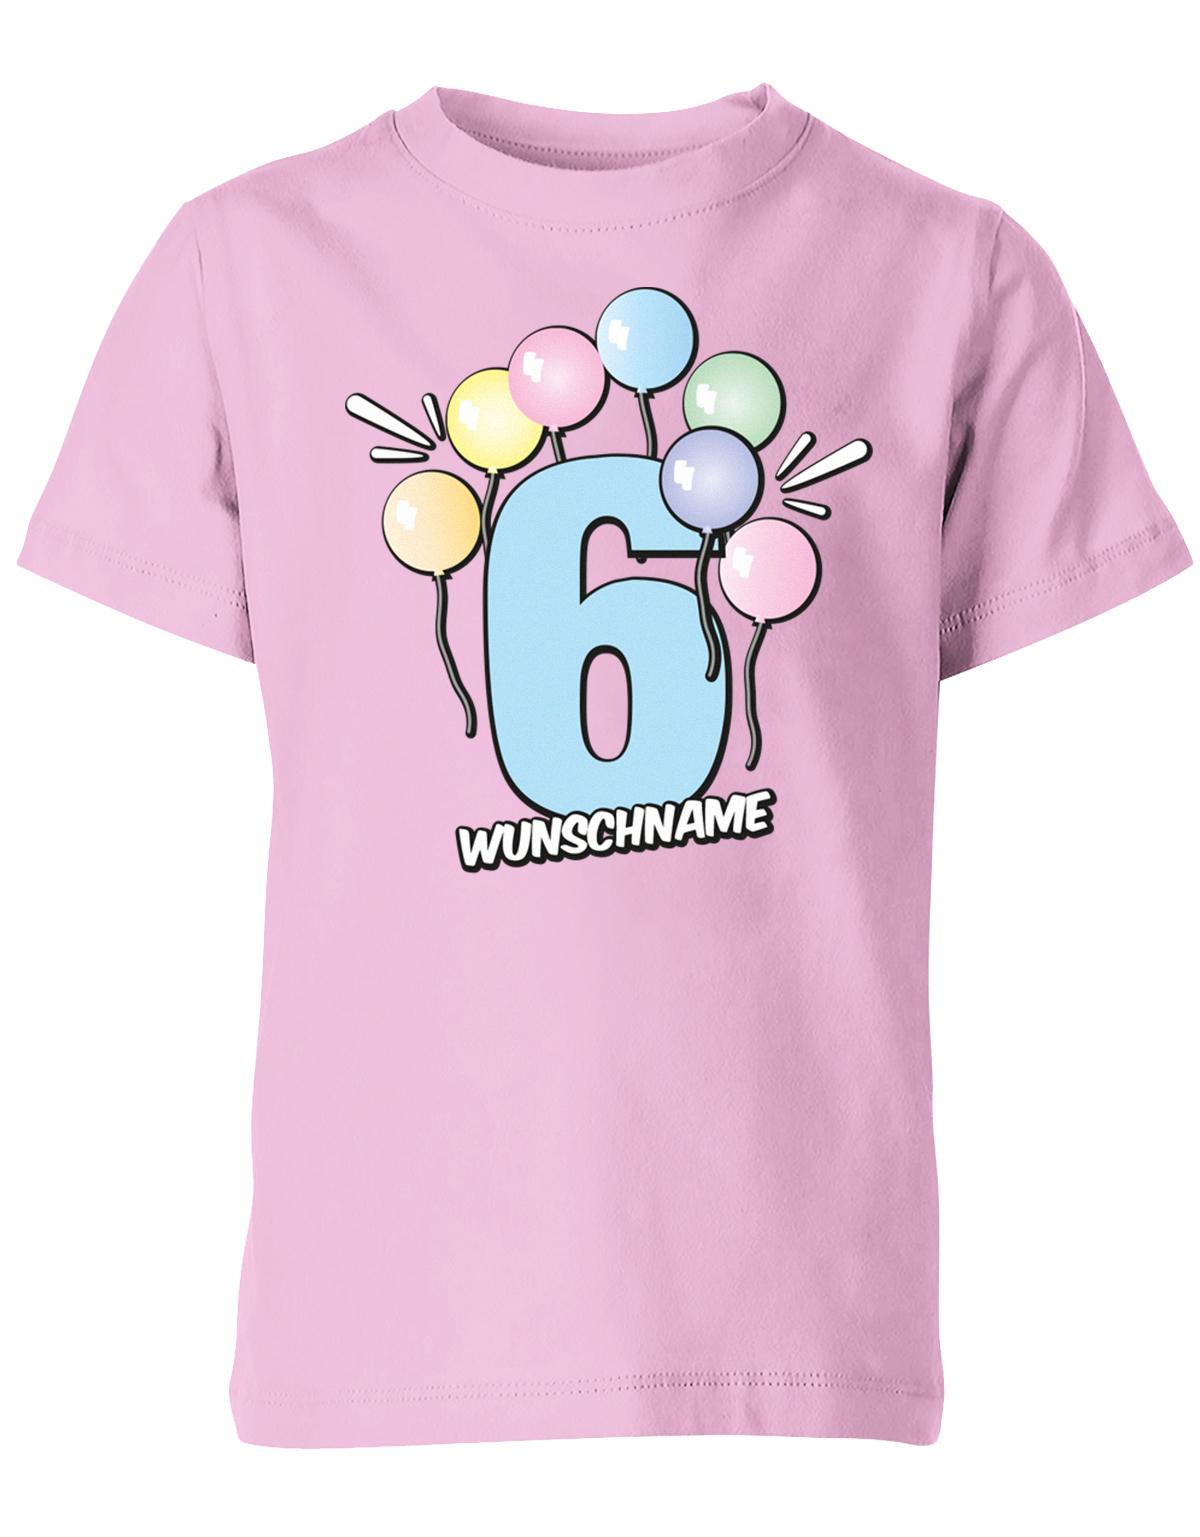 Luftballons-pastell-6-geburtstag-wunschname-kinder-shirt-rosa